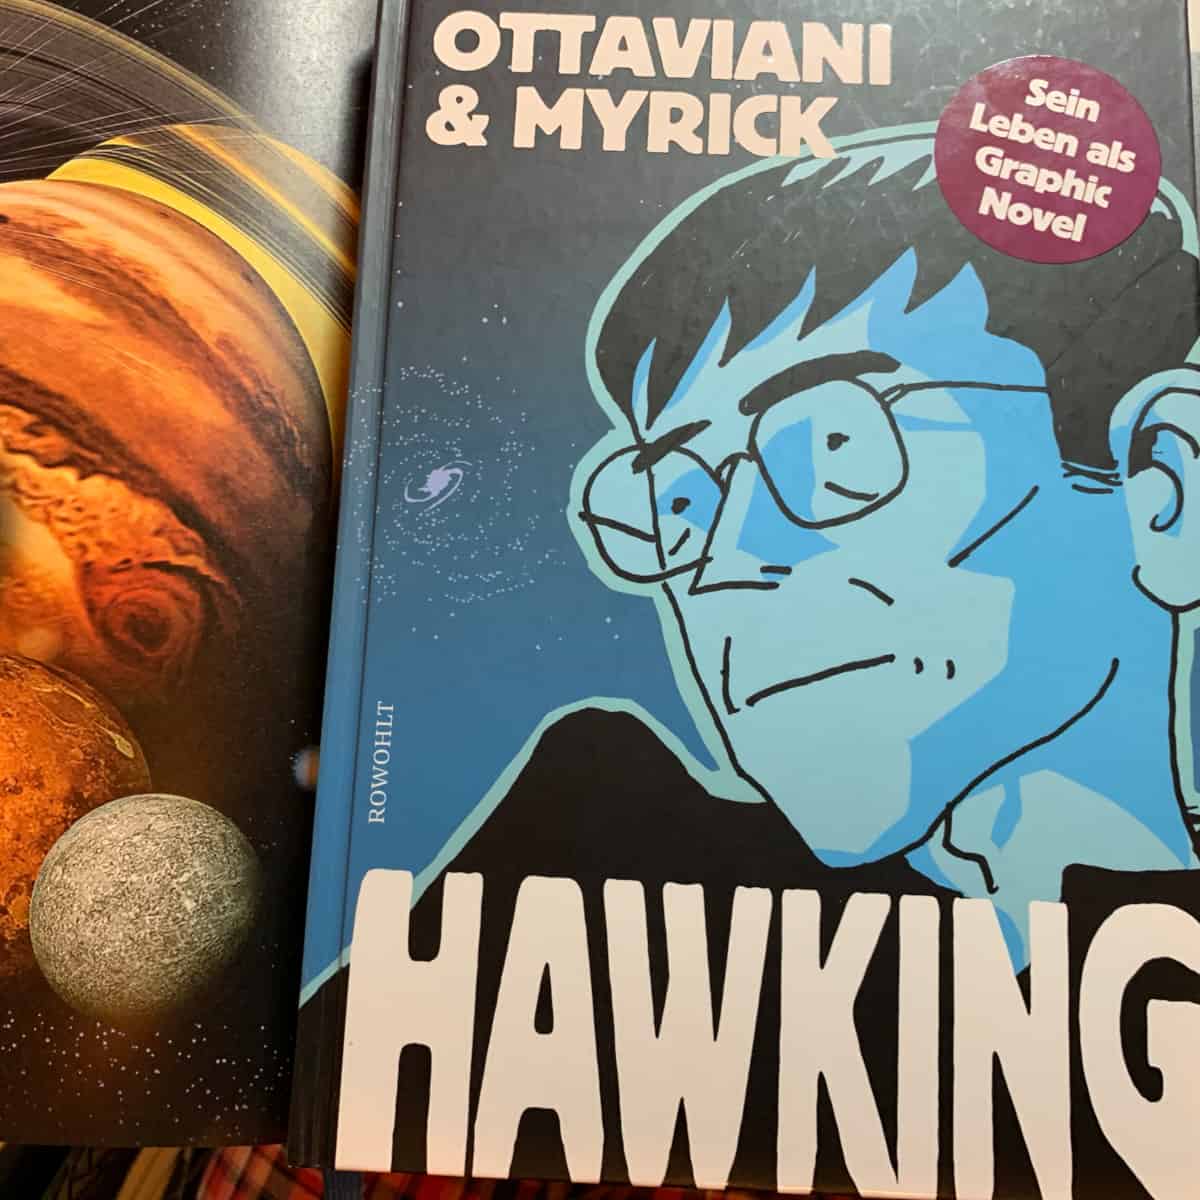 Hawking Ottaviani